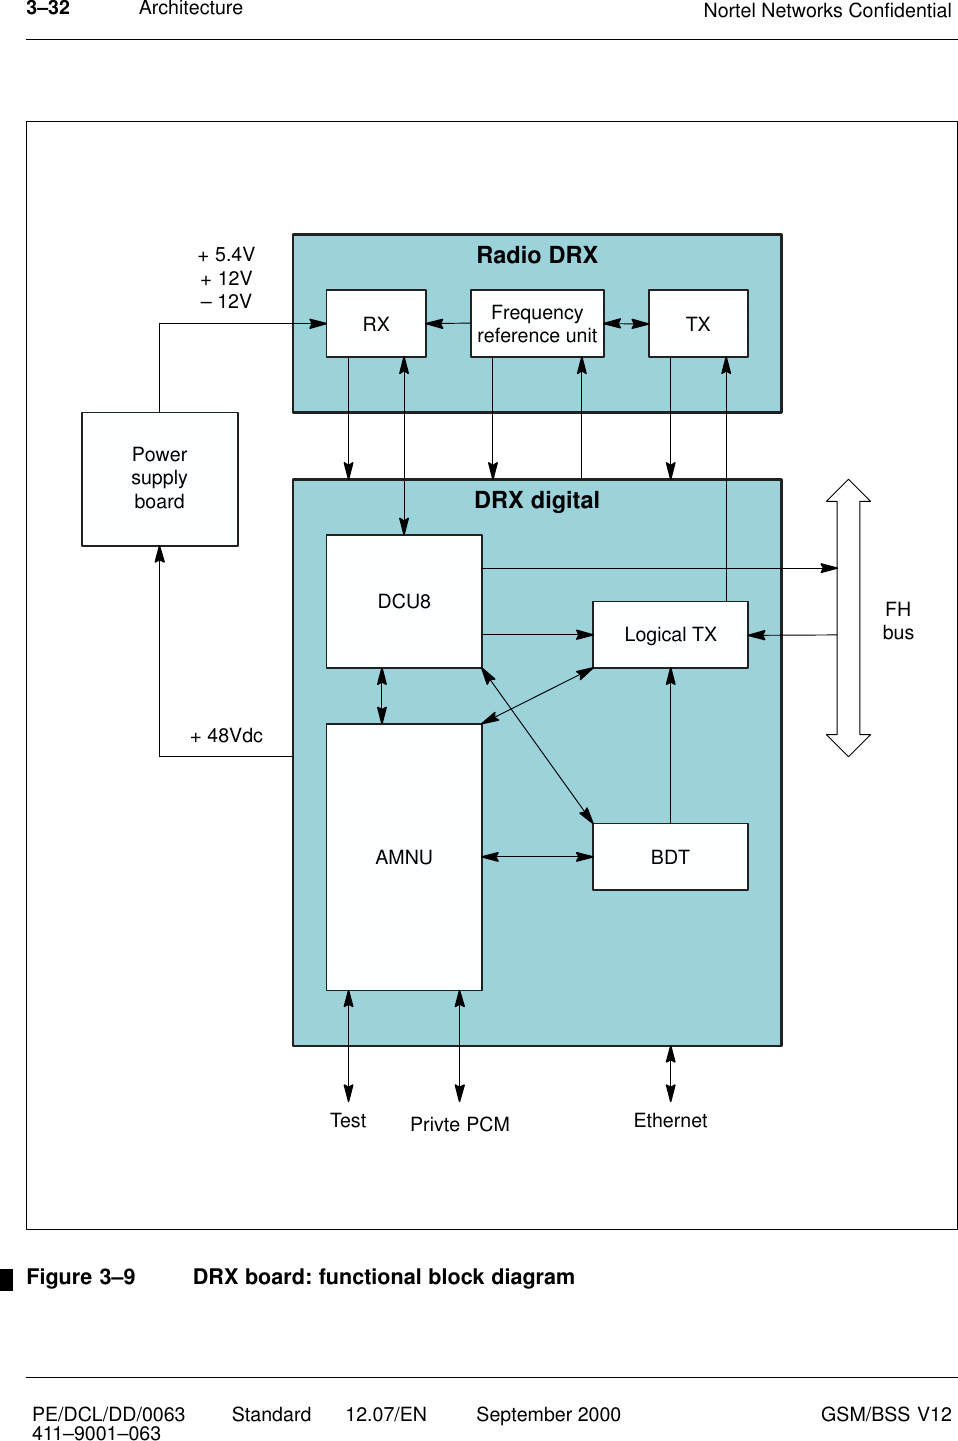 Architecture Nortel Networks Confidential3–32PE/DCL/DD/0063411–9001–063 Standard      12.07/EN September 2000 GSM/BSS V12AMNUDCU8RXTest EthernetBDTDRX digitalFHbusPrivte PCMRadio DRXLogical TXTXPowersupplyboard+ 5.4V+ 12V– 12V+ 48VdcFrequencyreference unitFigure 3–9 DRX board: functional block diagram